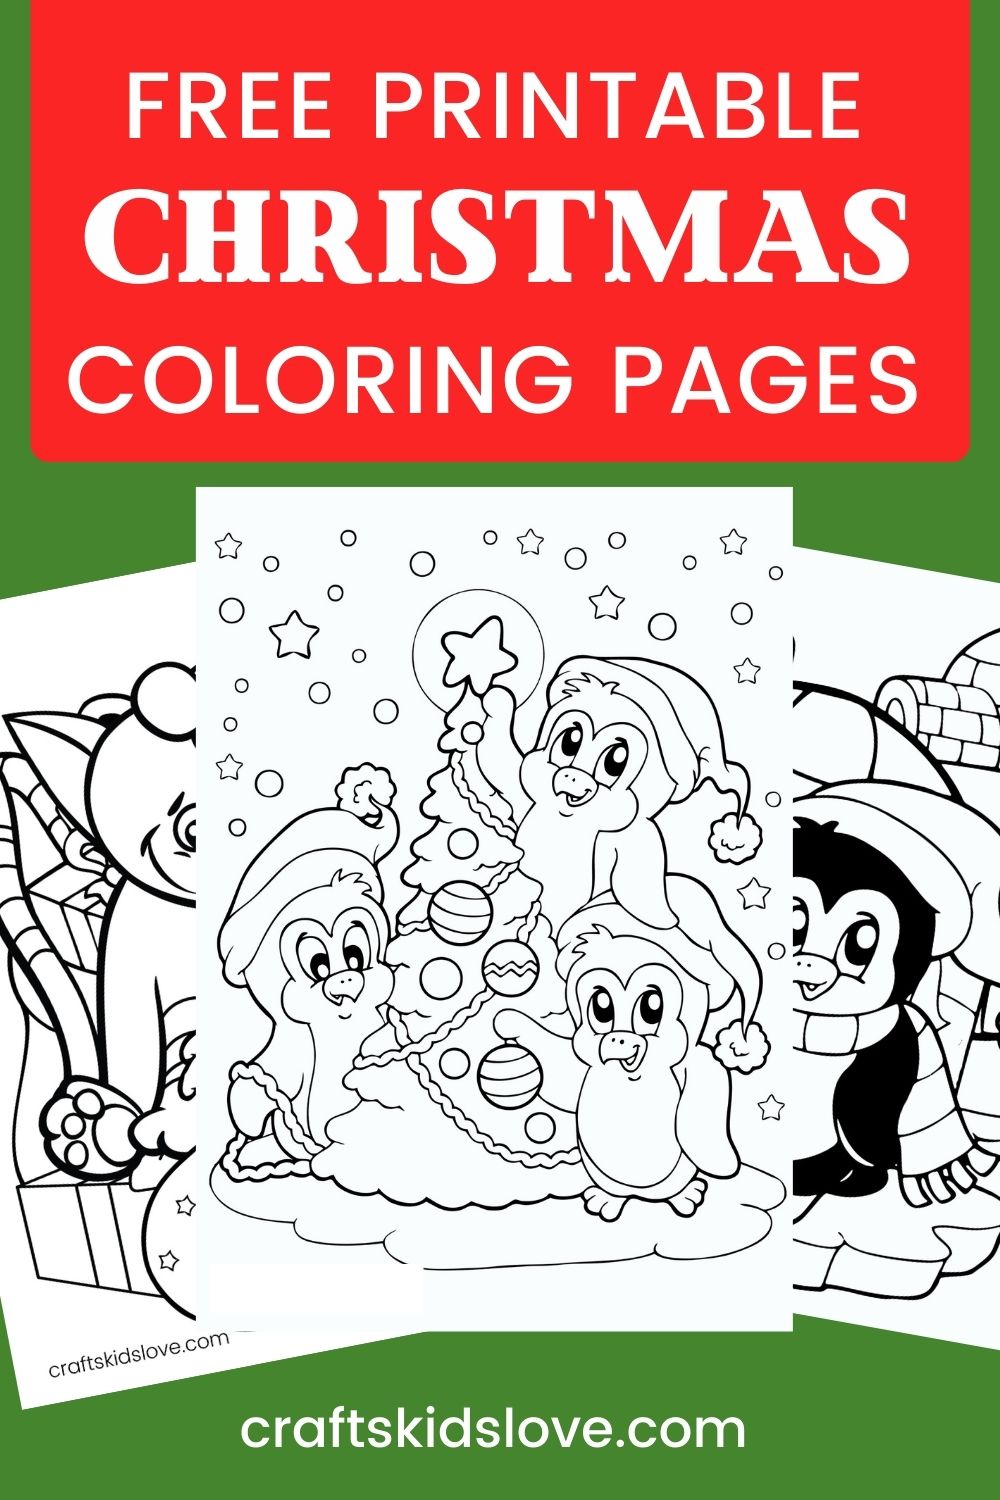 free printable Christmas coloring sheets